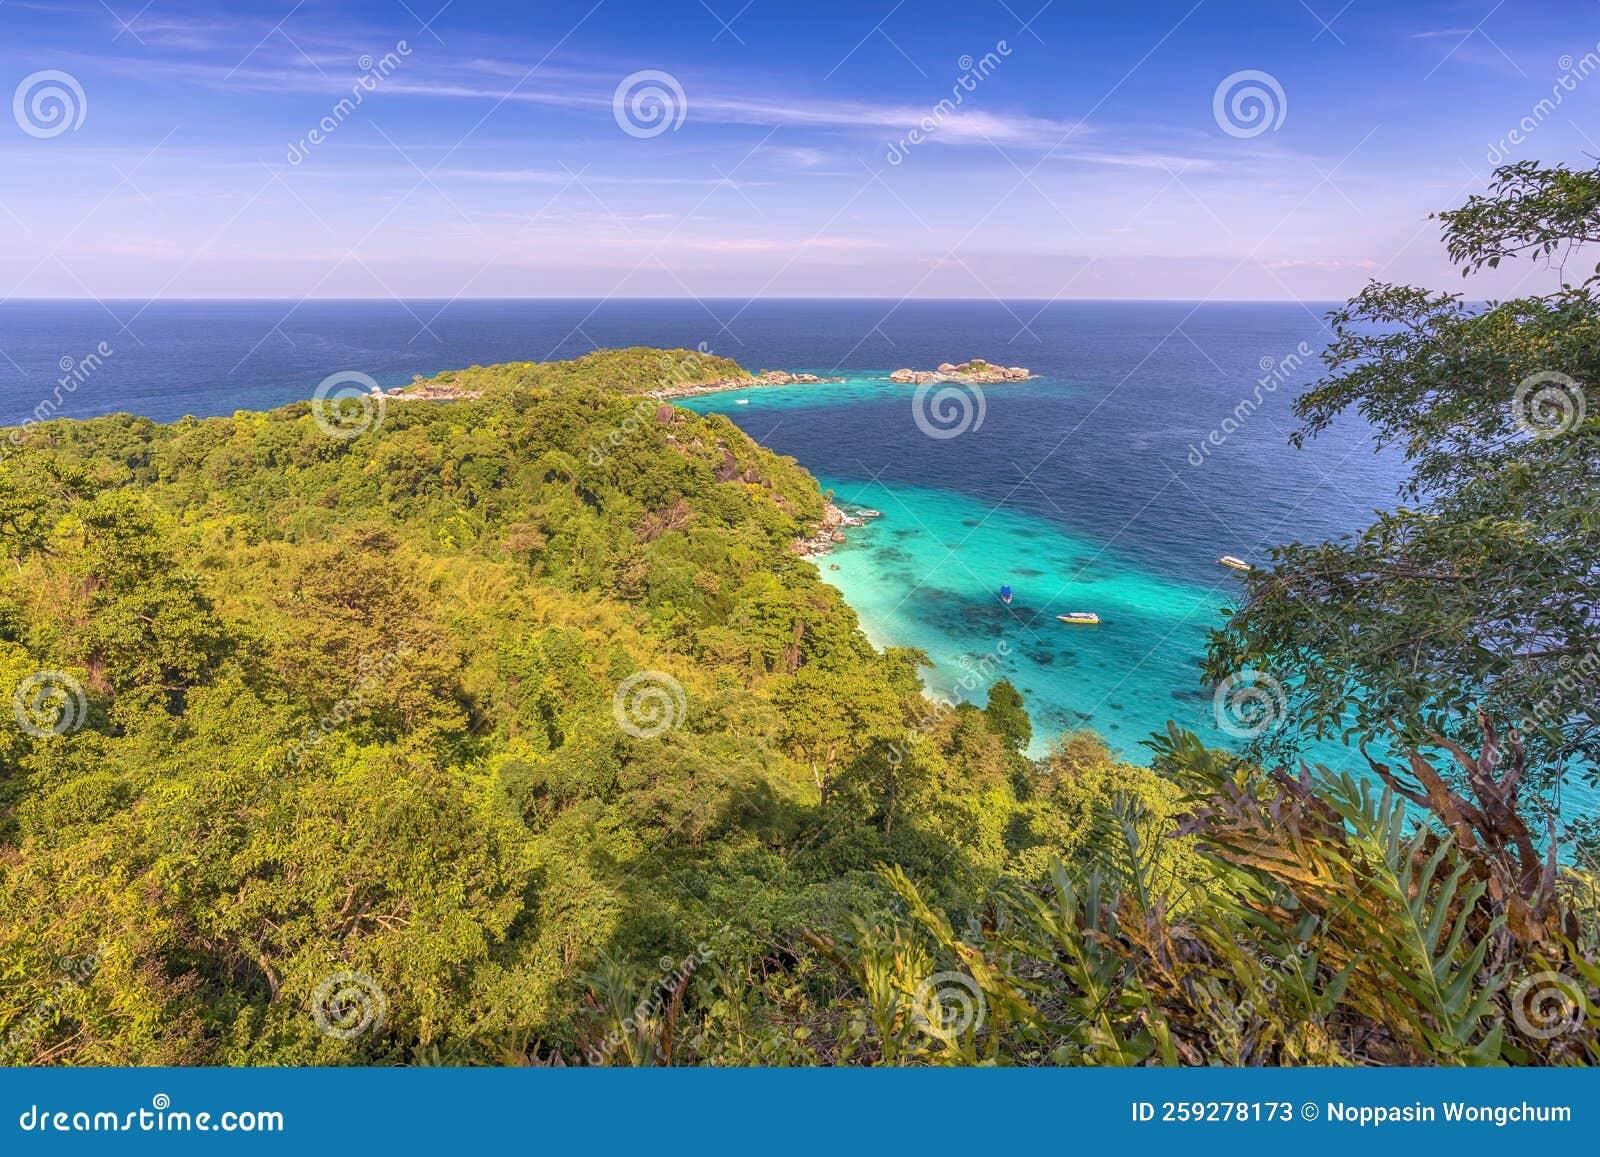 Tropical Islands View of Ocean Blue Sea at Similan Islands, Phang Nga